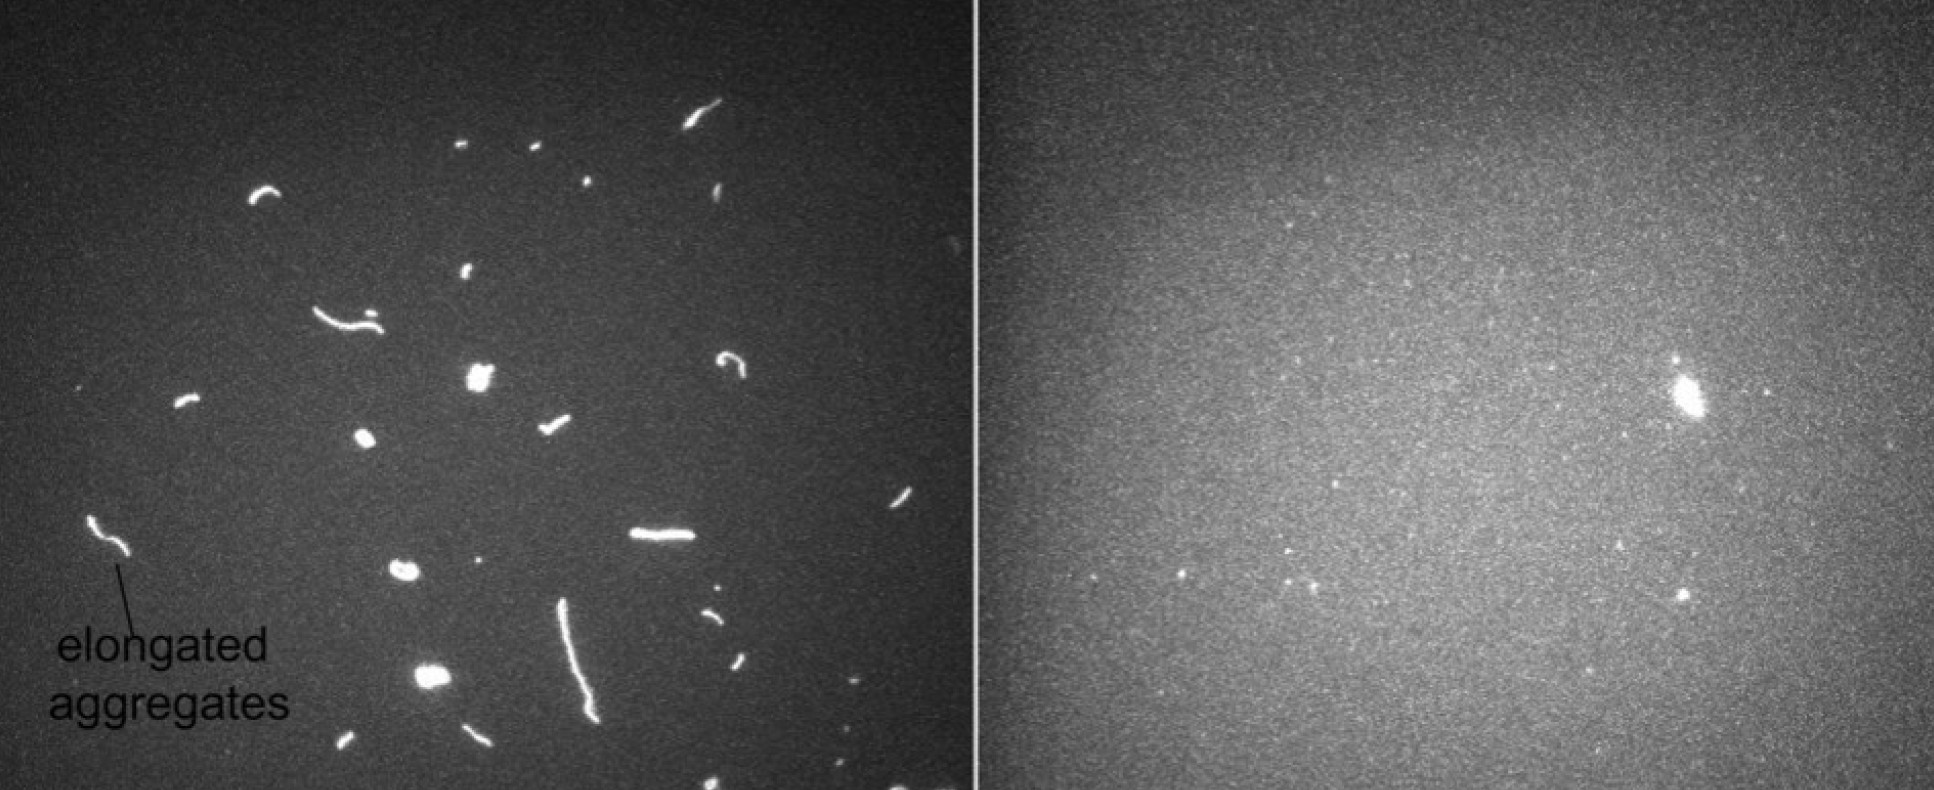 Black and white microscope image of Tau